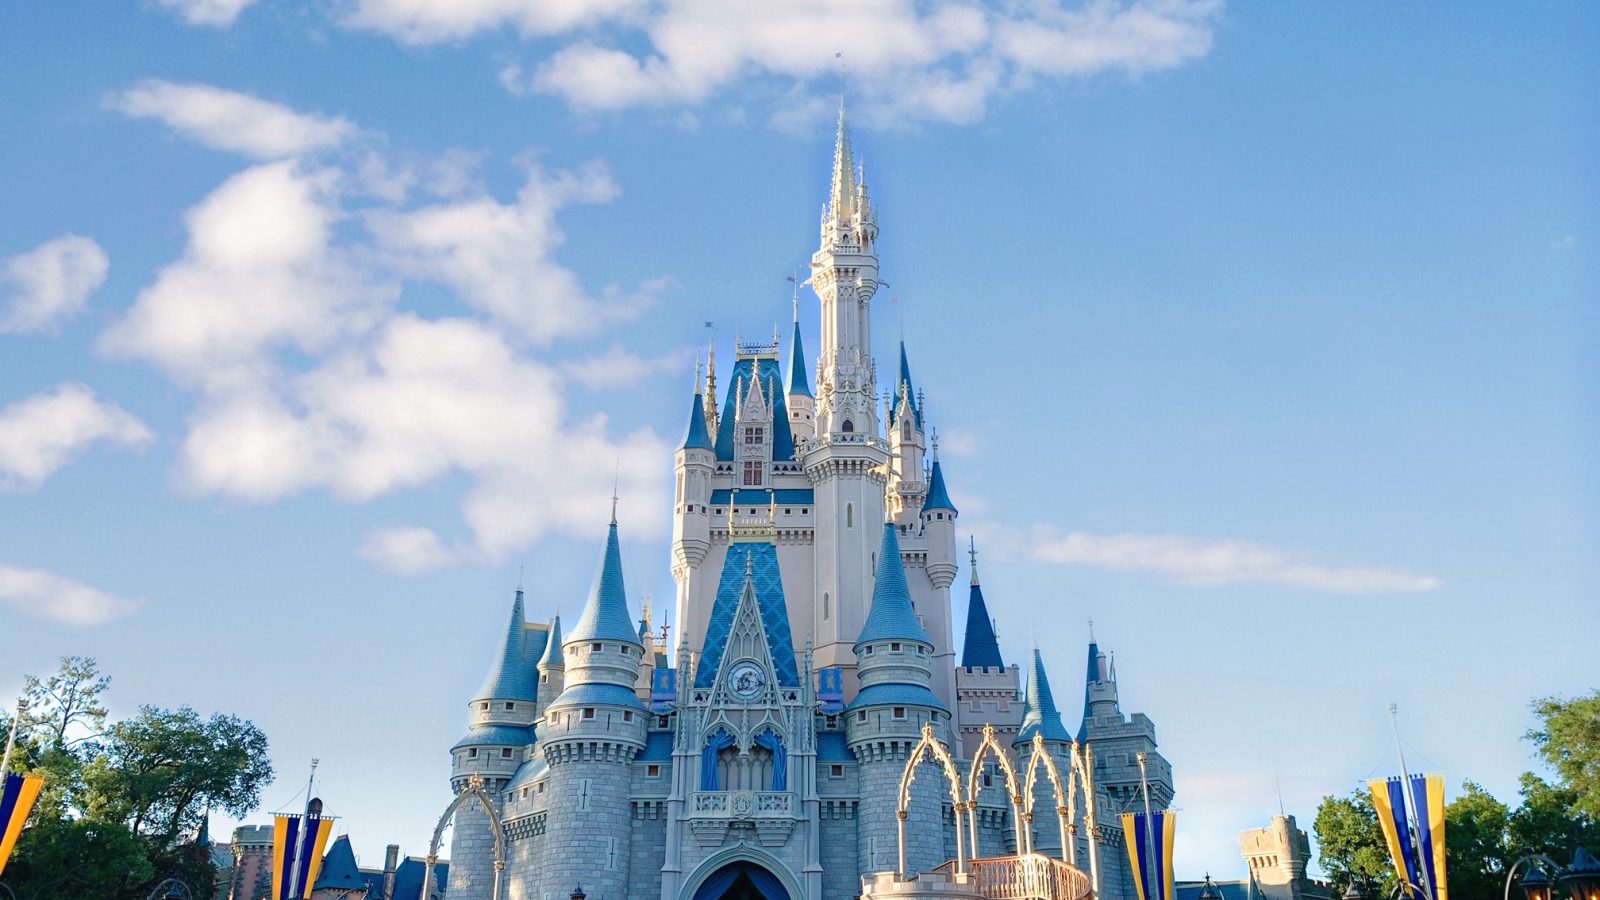 Photo of Cinderella's Castle at Walt Disney World